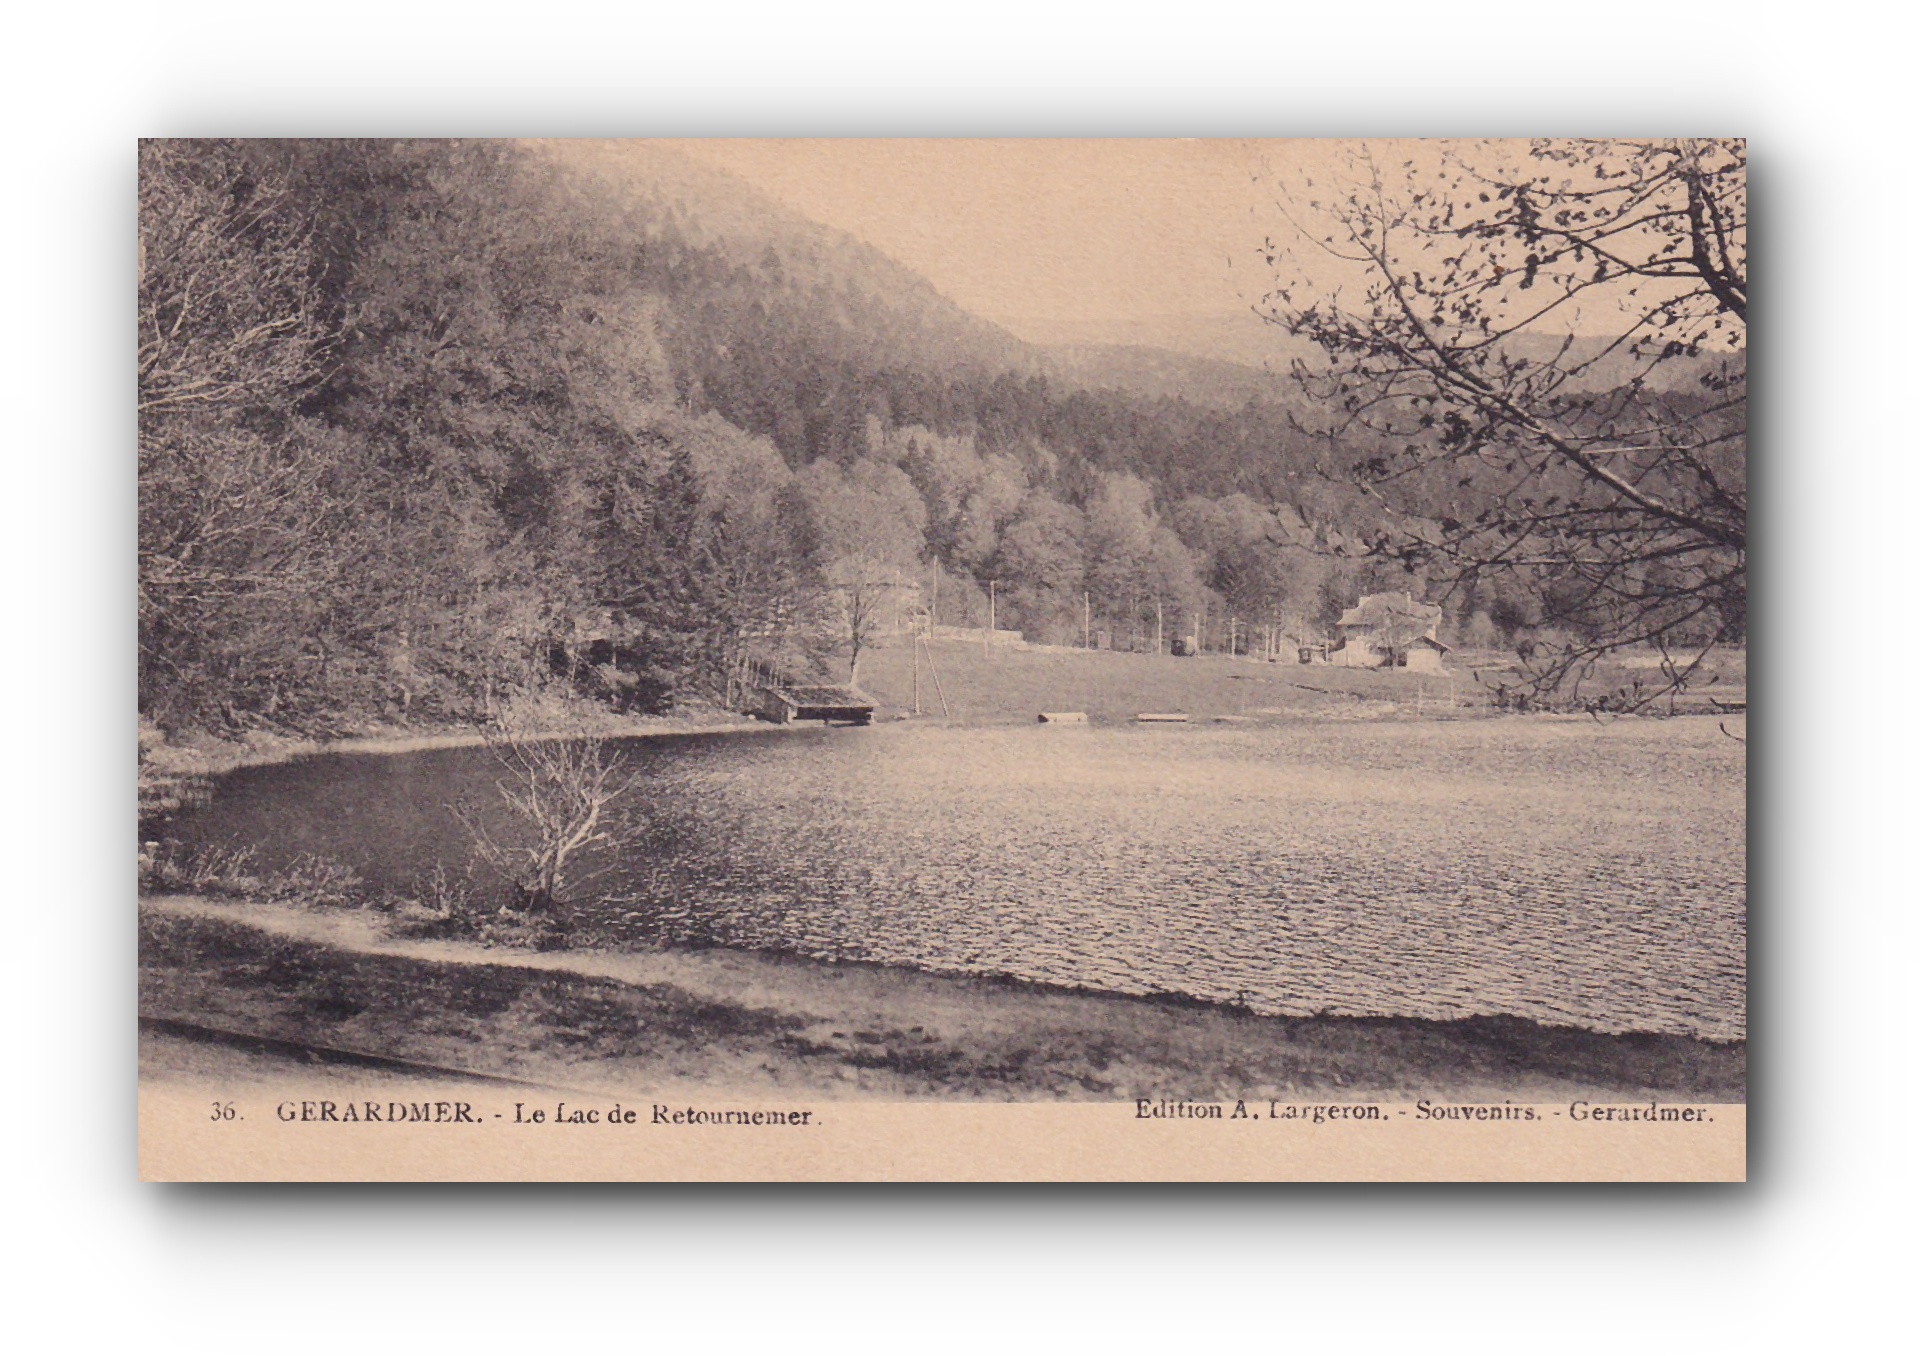 - GERARDMER - Le Lac de Retournemer - 08.07.1906 -